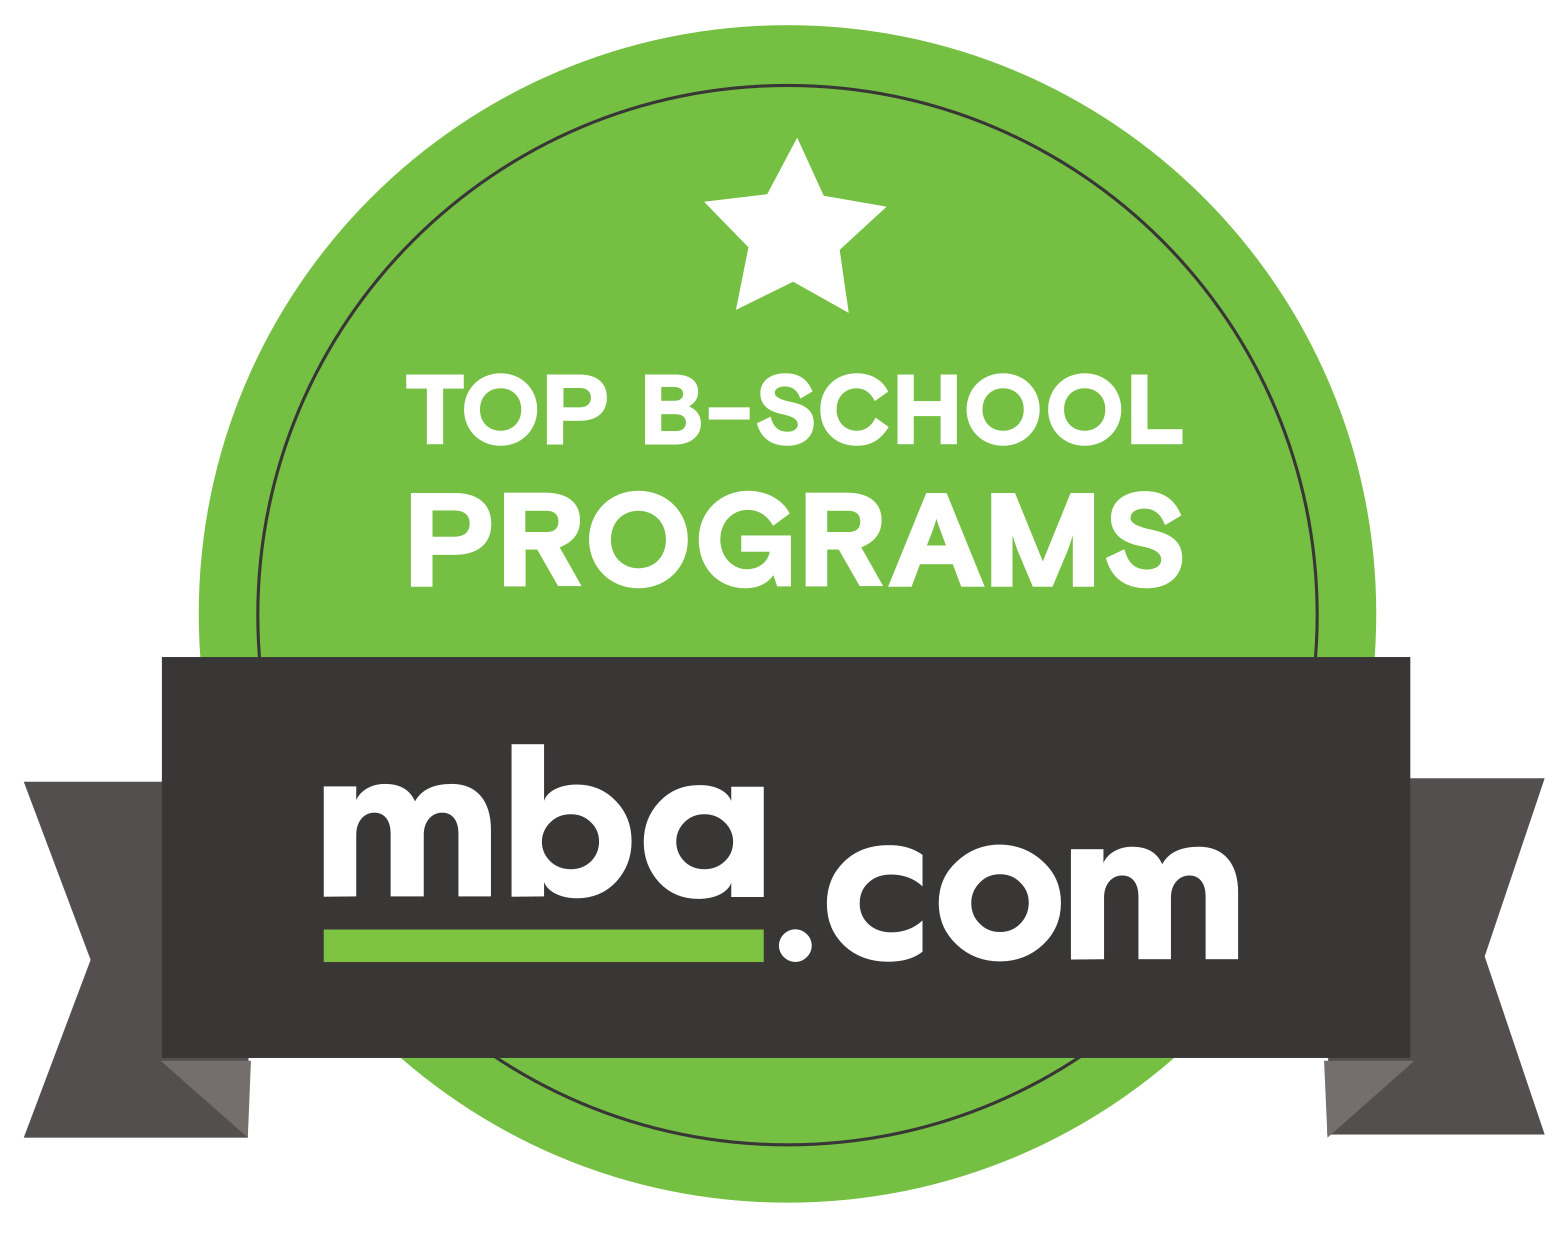 Top MBA mba.com